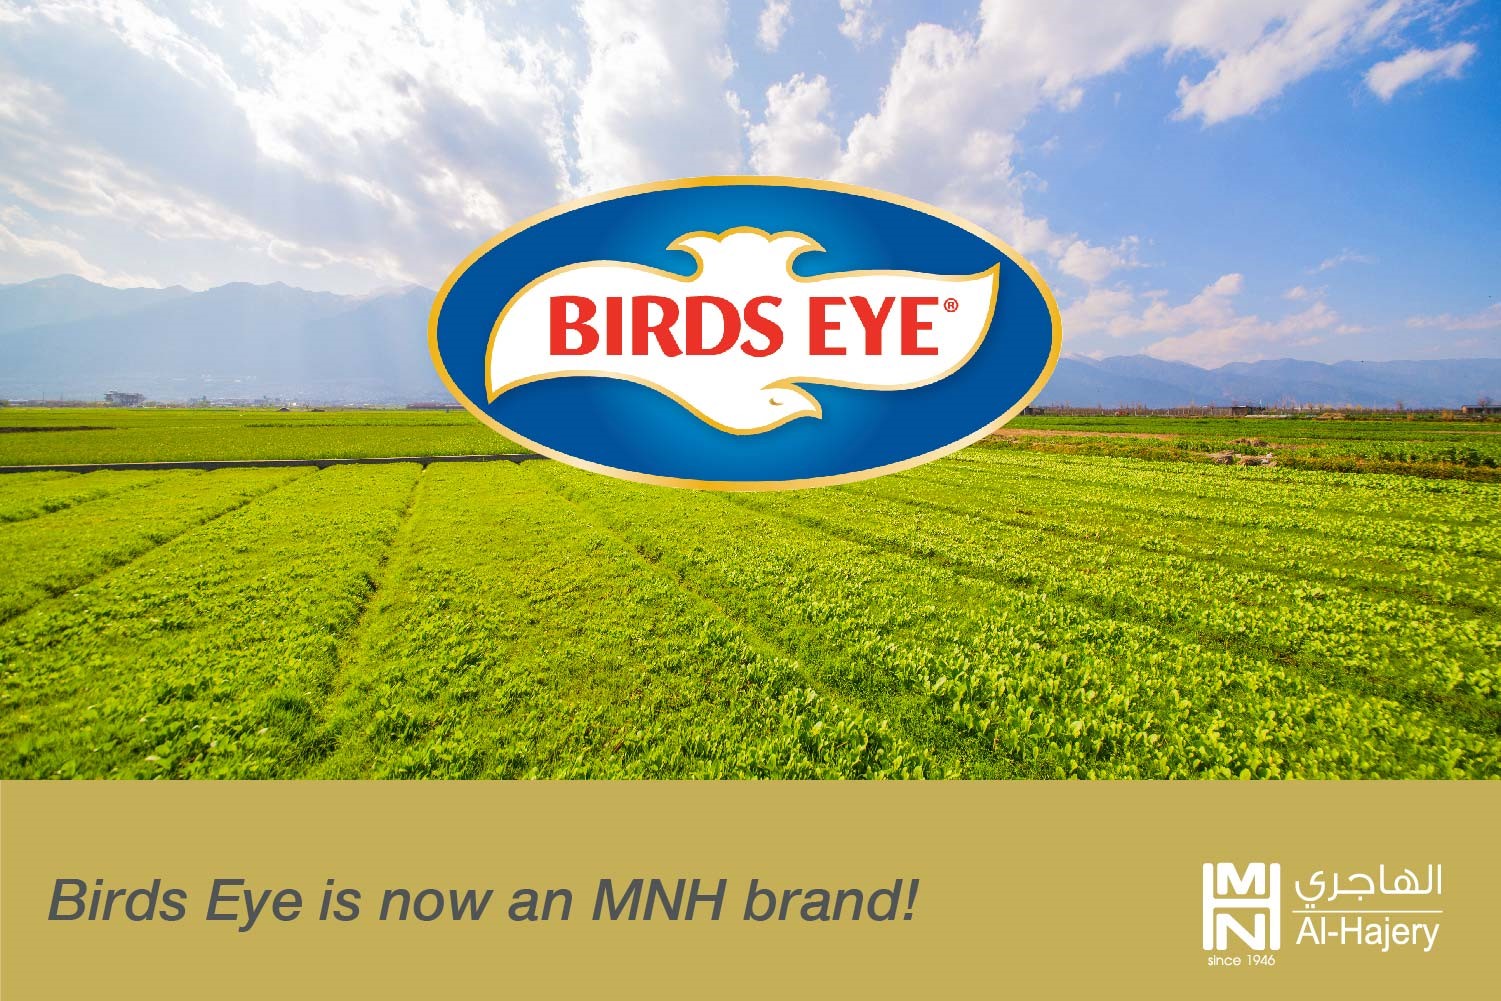 MNH acquires Birds Eye